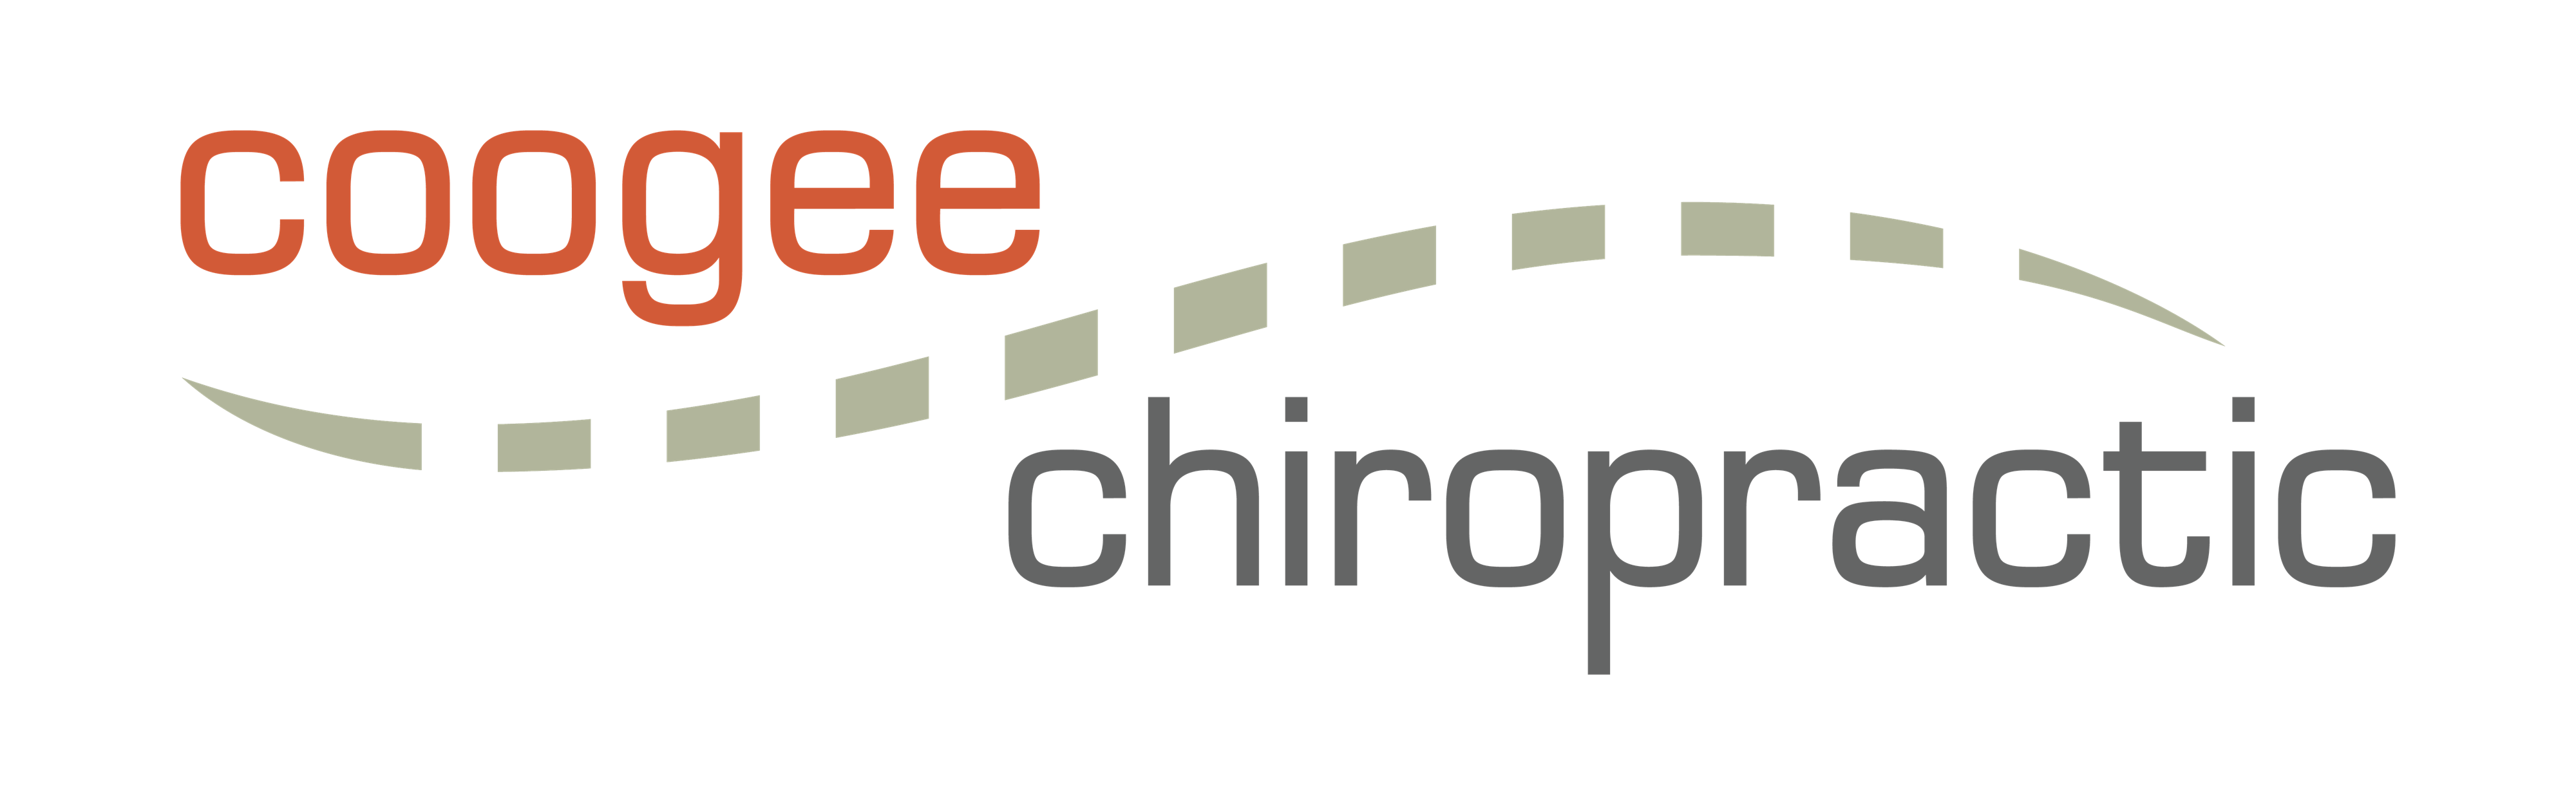 Coogee Chiropractic Logo.